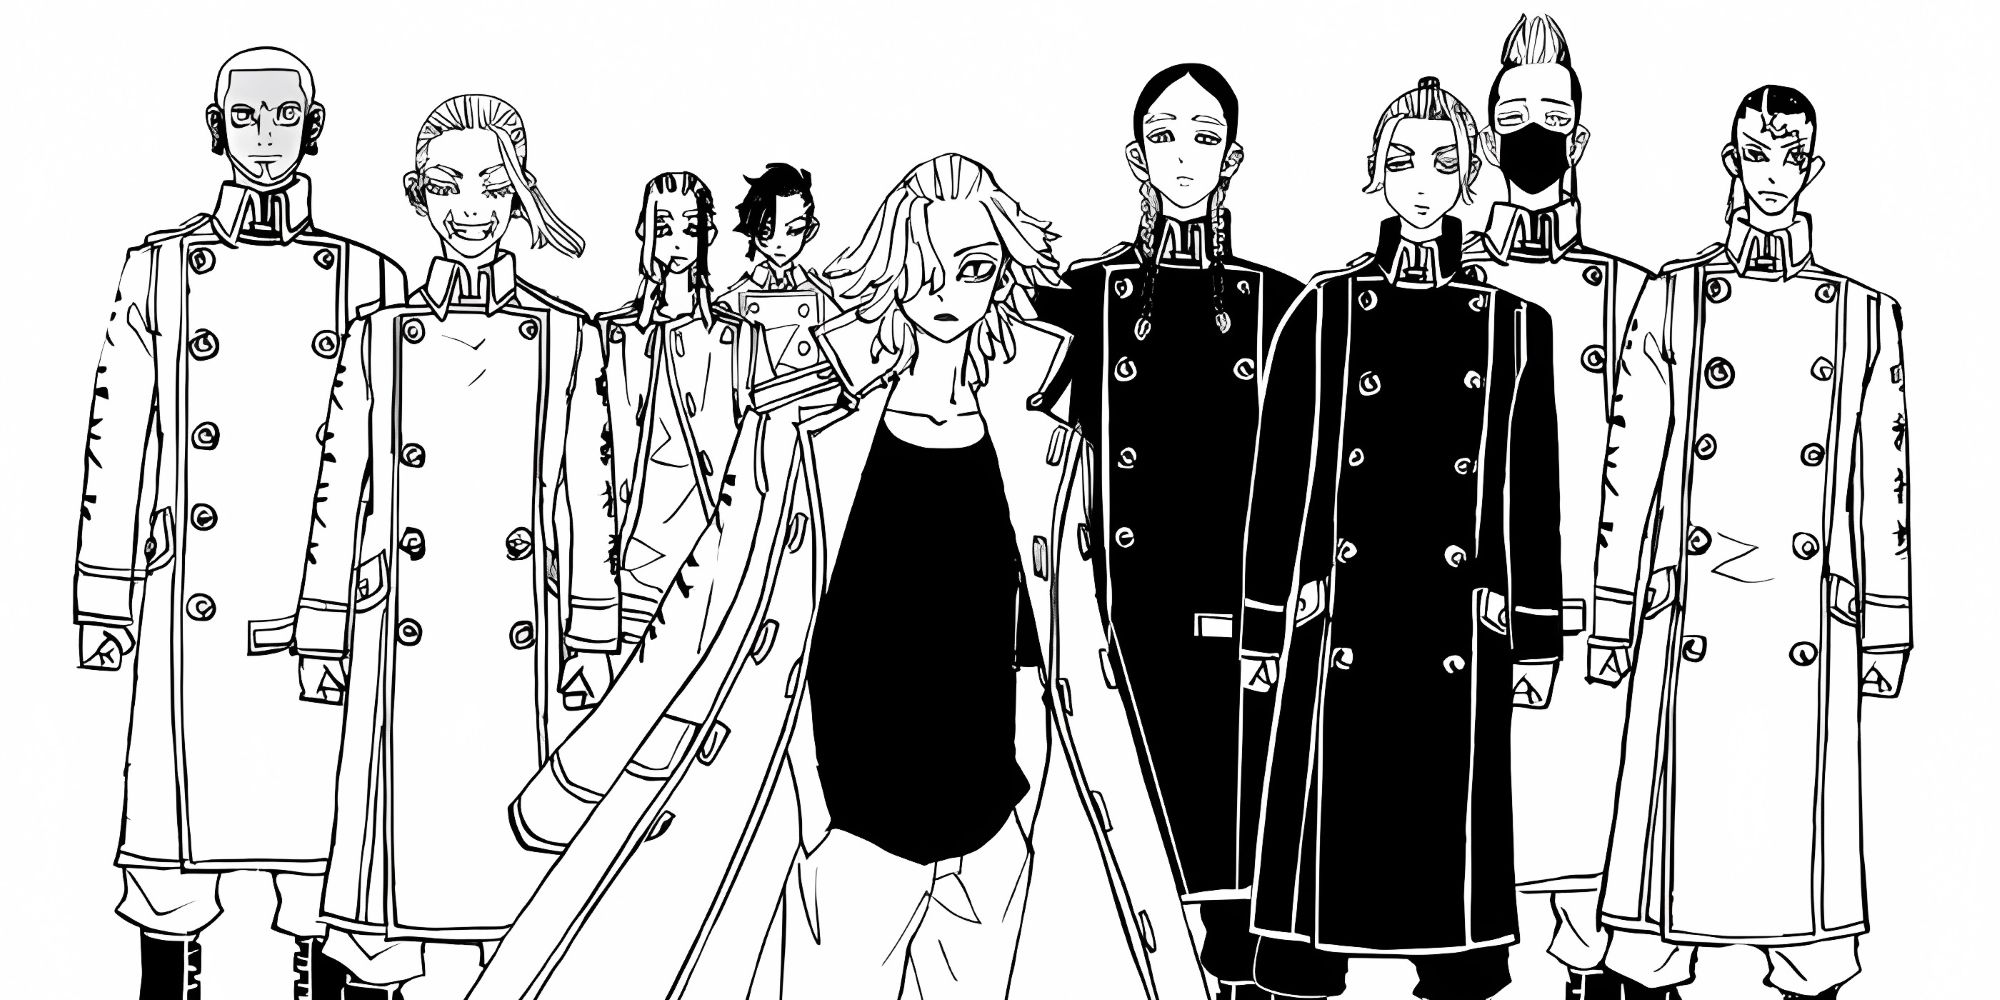 The leaders of the Kanto Manji Gang